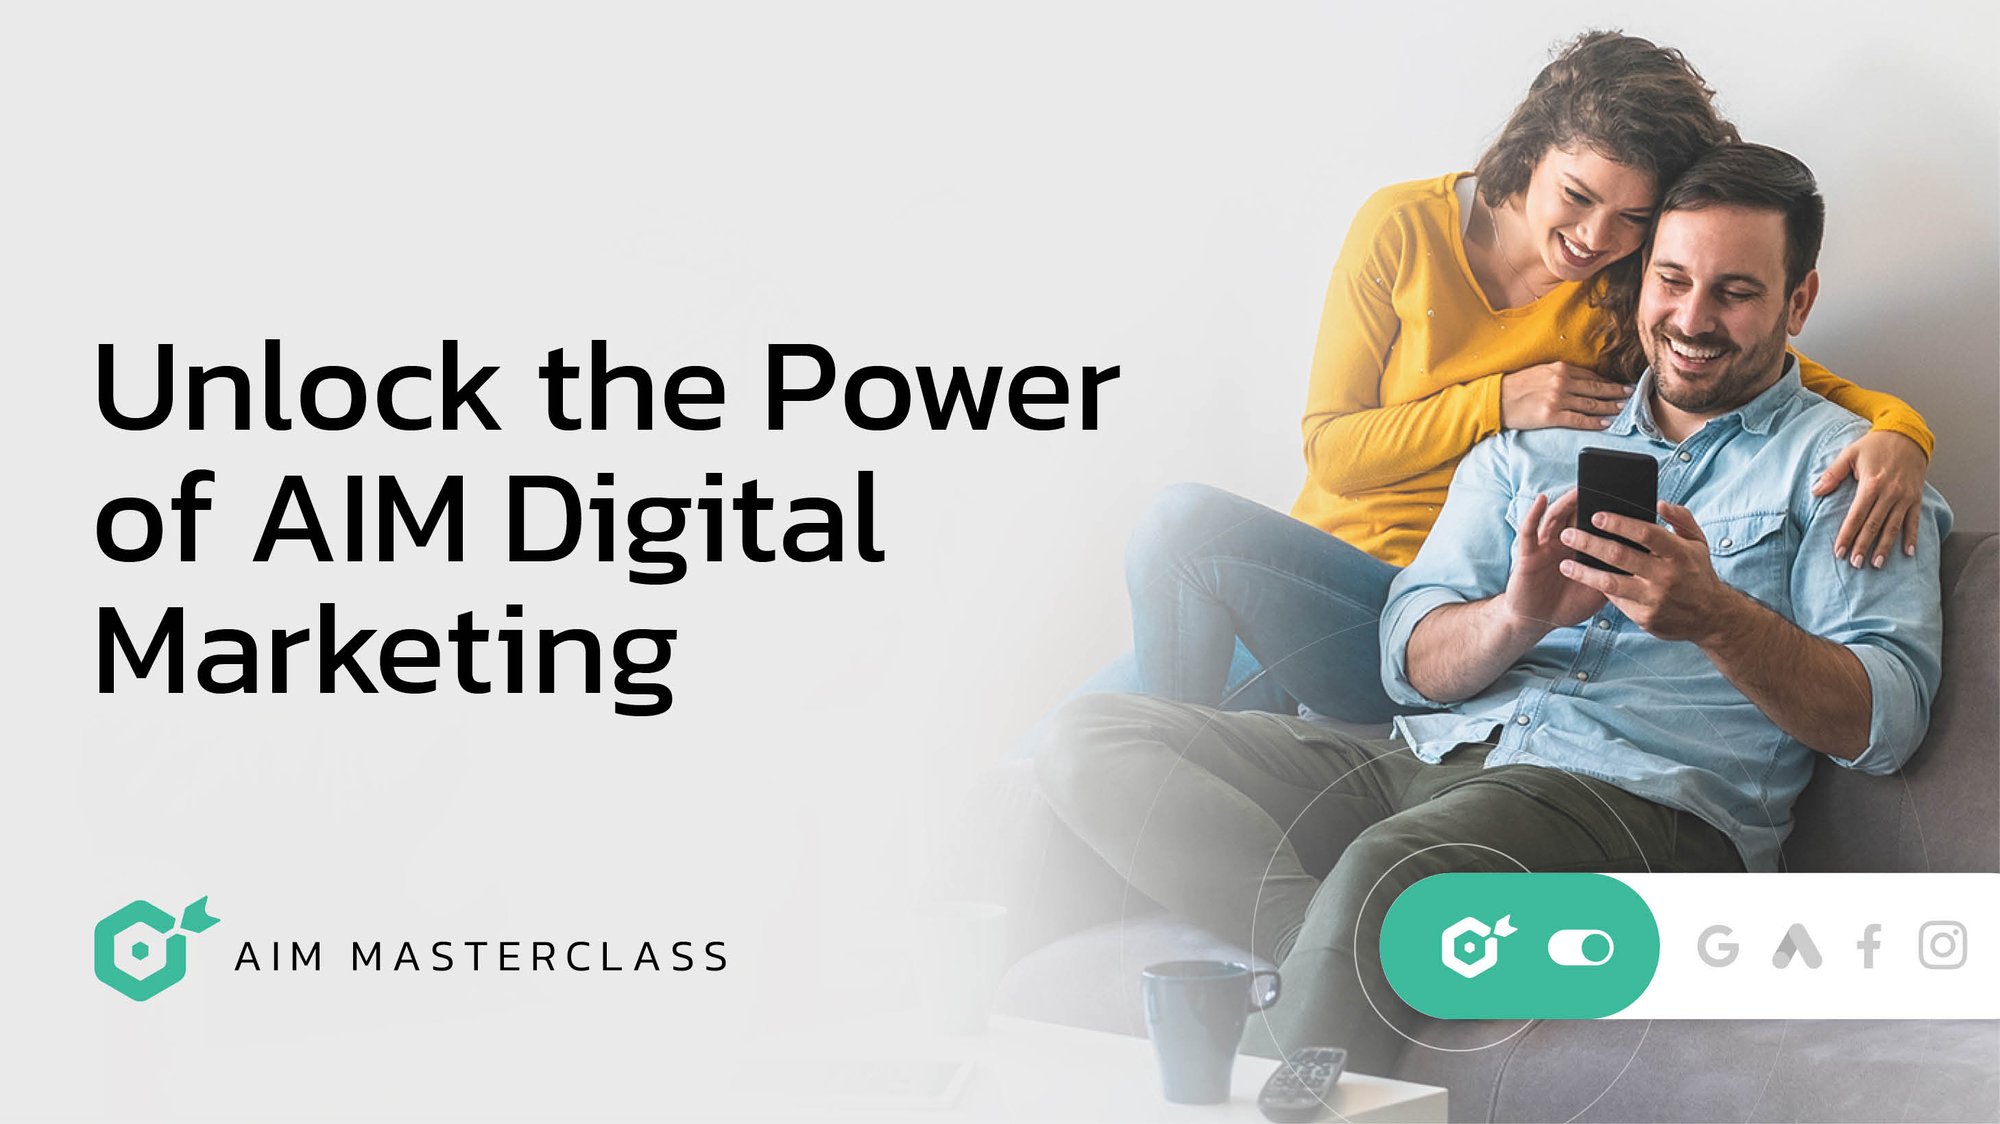 AIM-masterclass-unlock-the-power-of-AIM-digital-marketing-lg